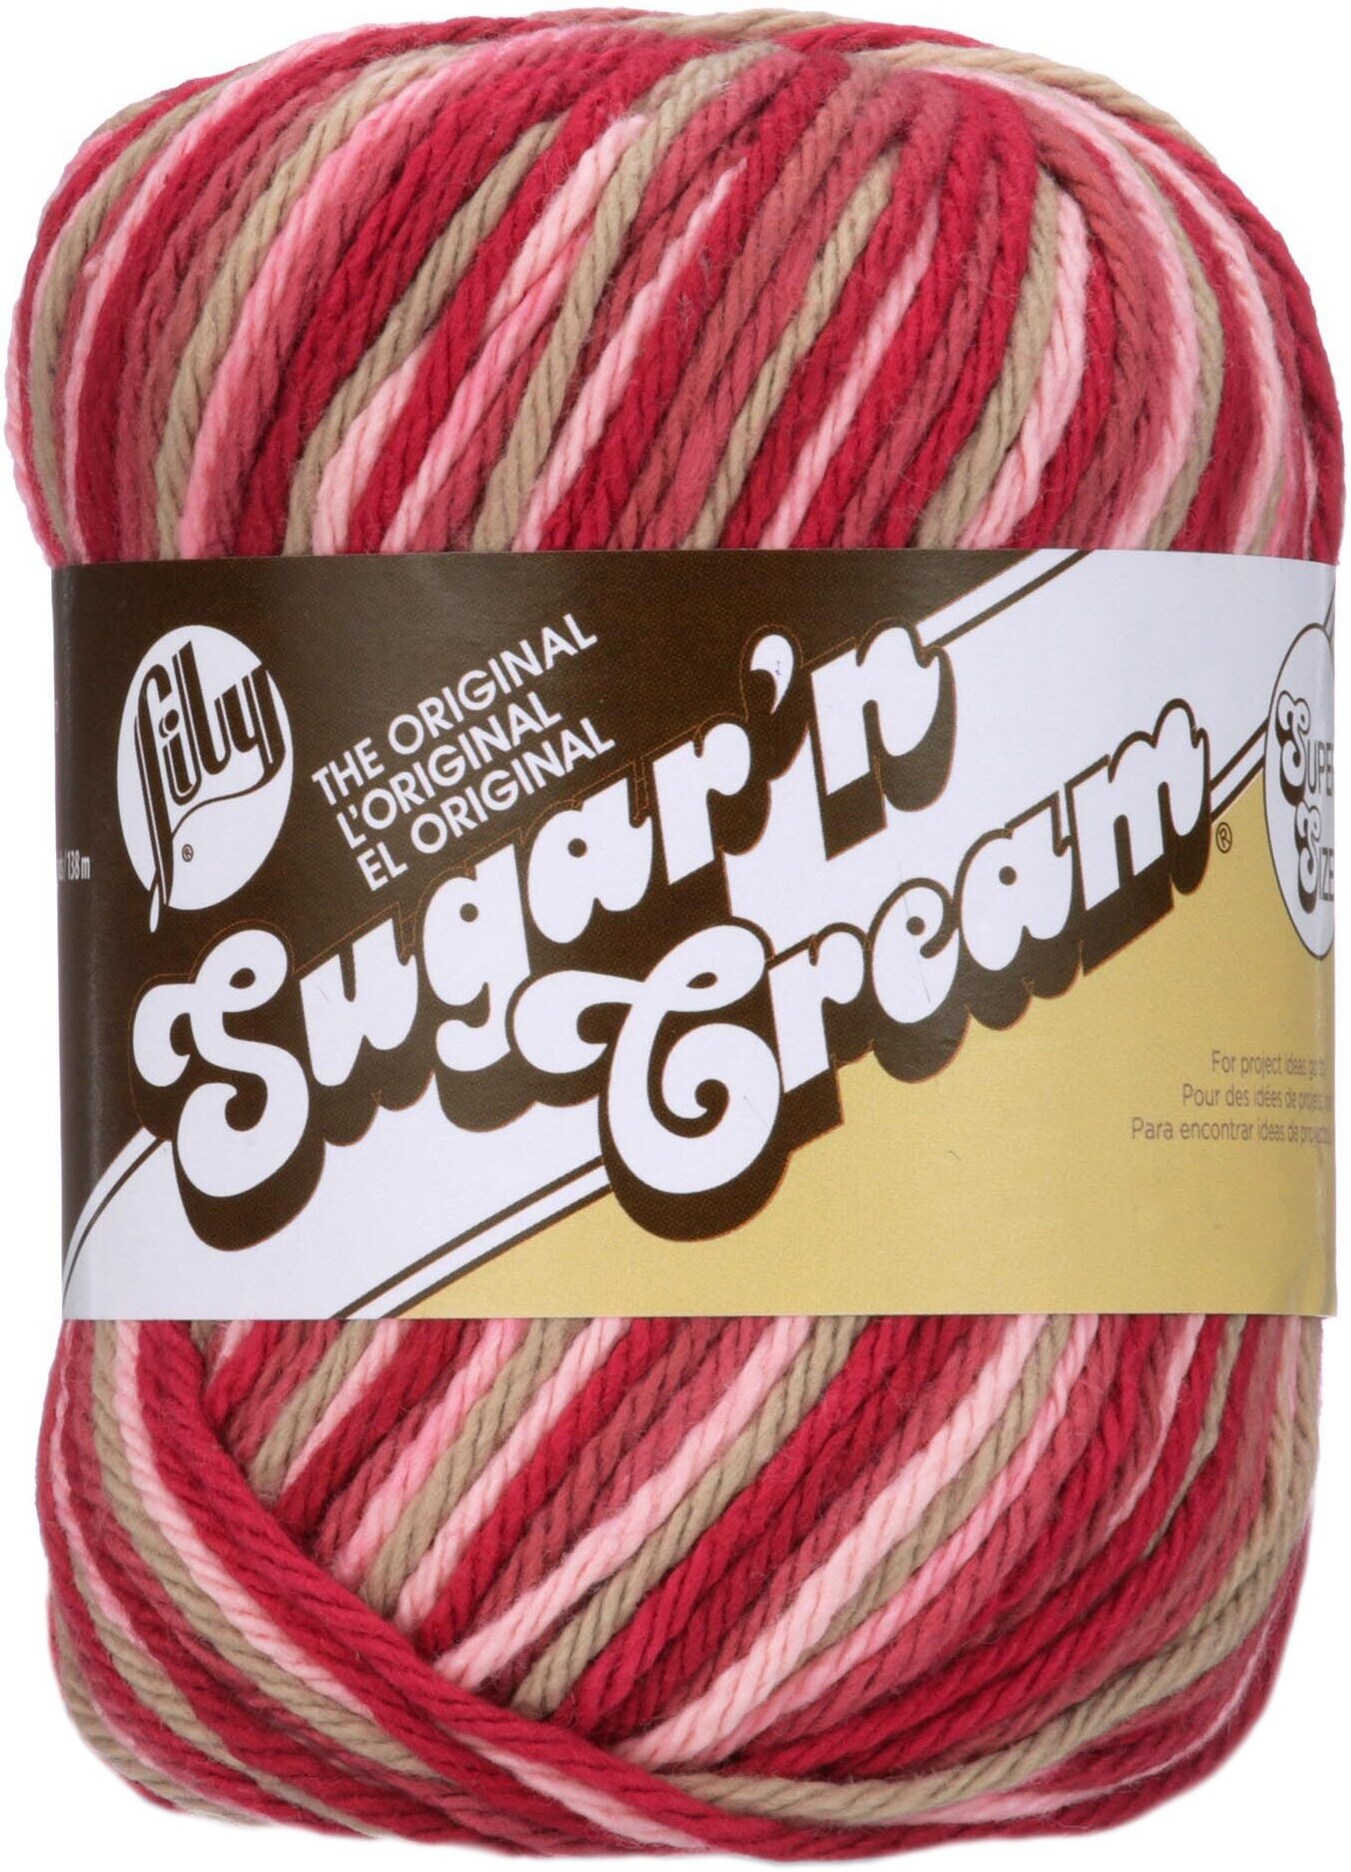 Lily Sugar'n Cream Super Size Worsted Cotton Yarn